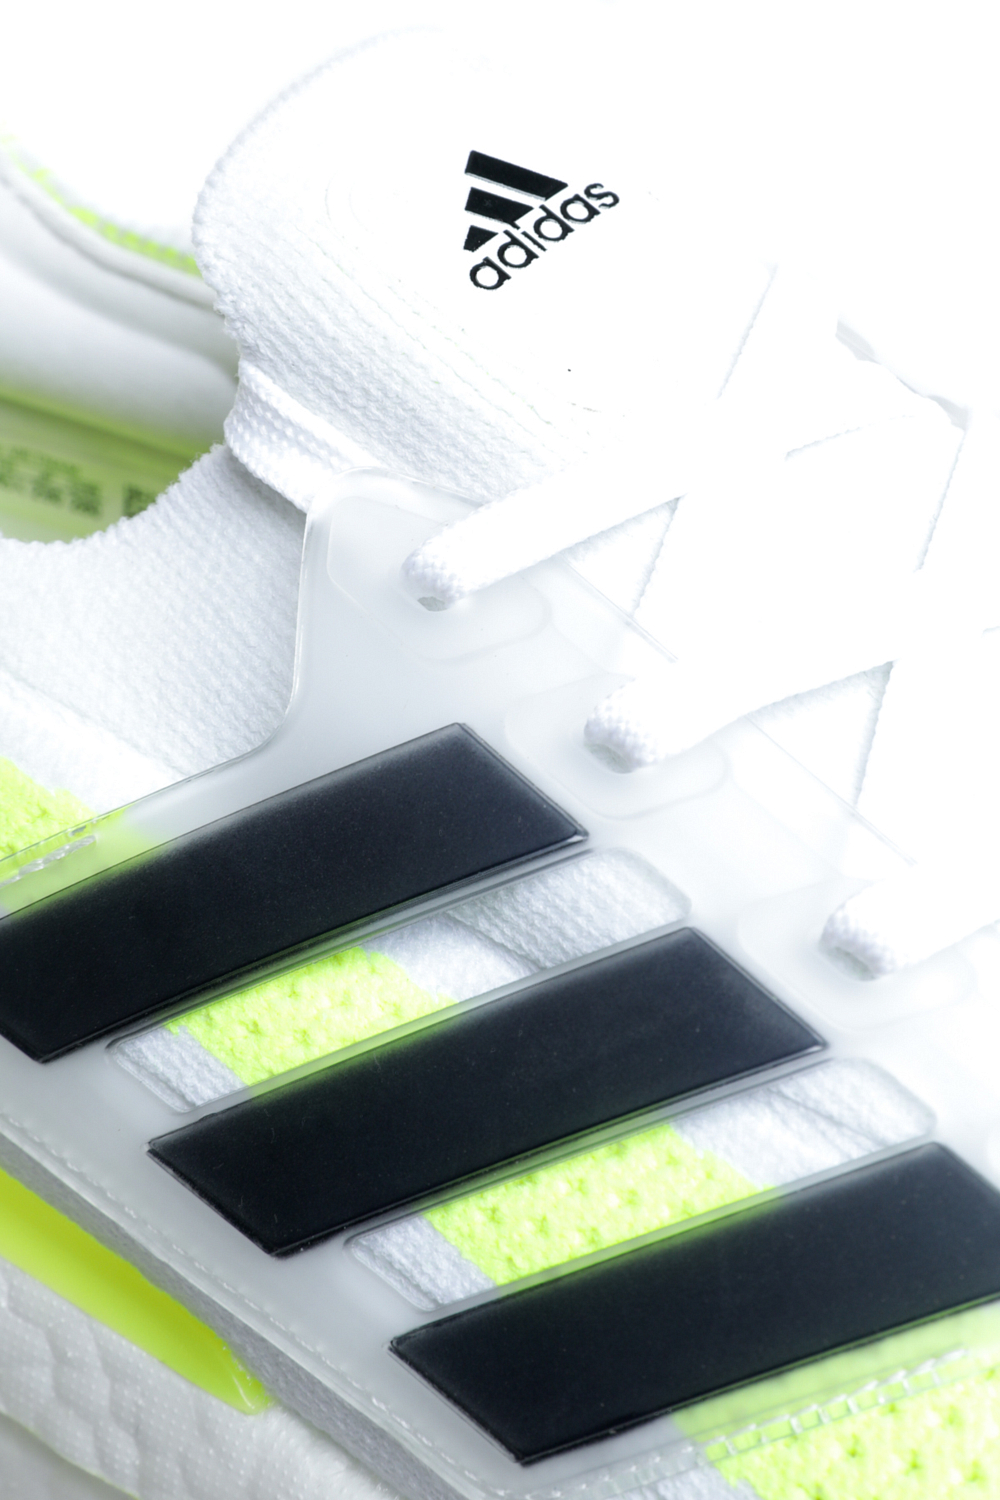 Беговые кроссовки Adidas Ultraboost 21 Ftw White/Core Black/Solar Yellow